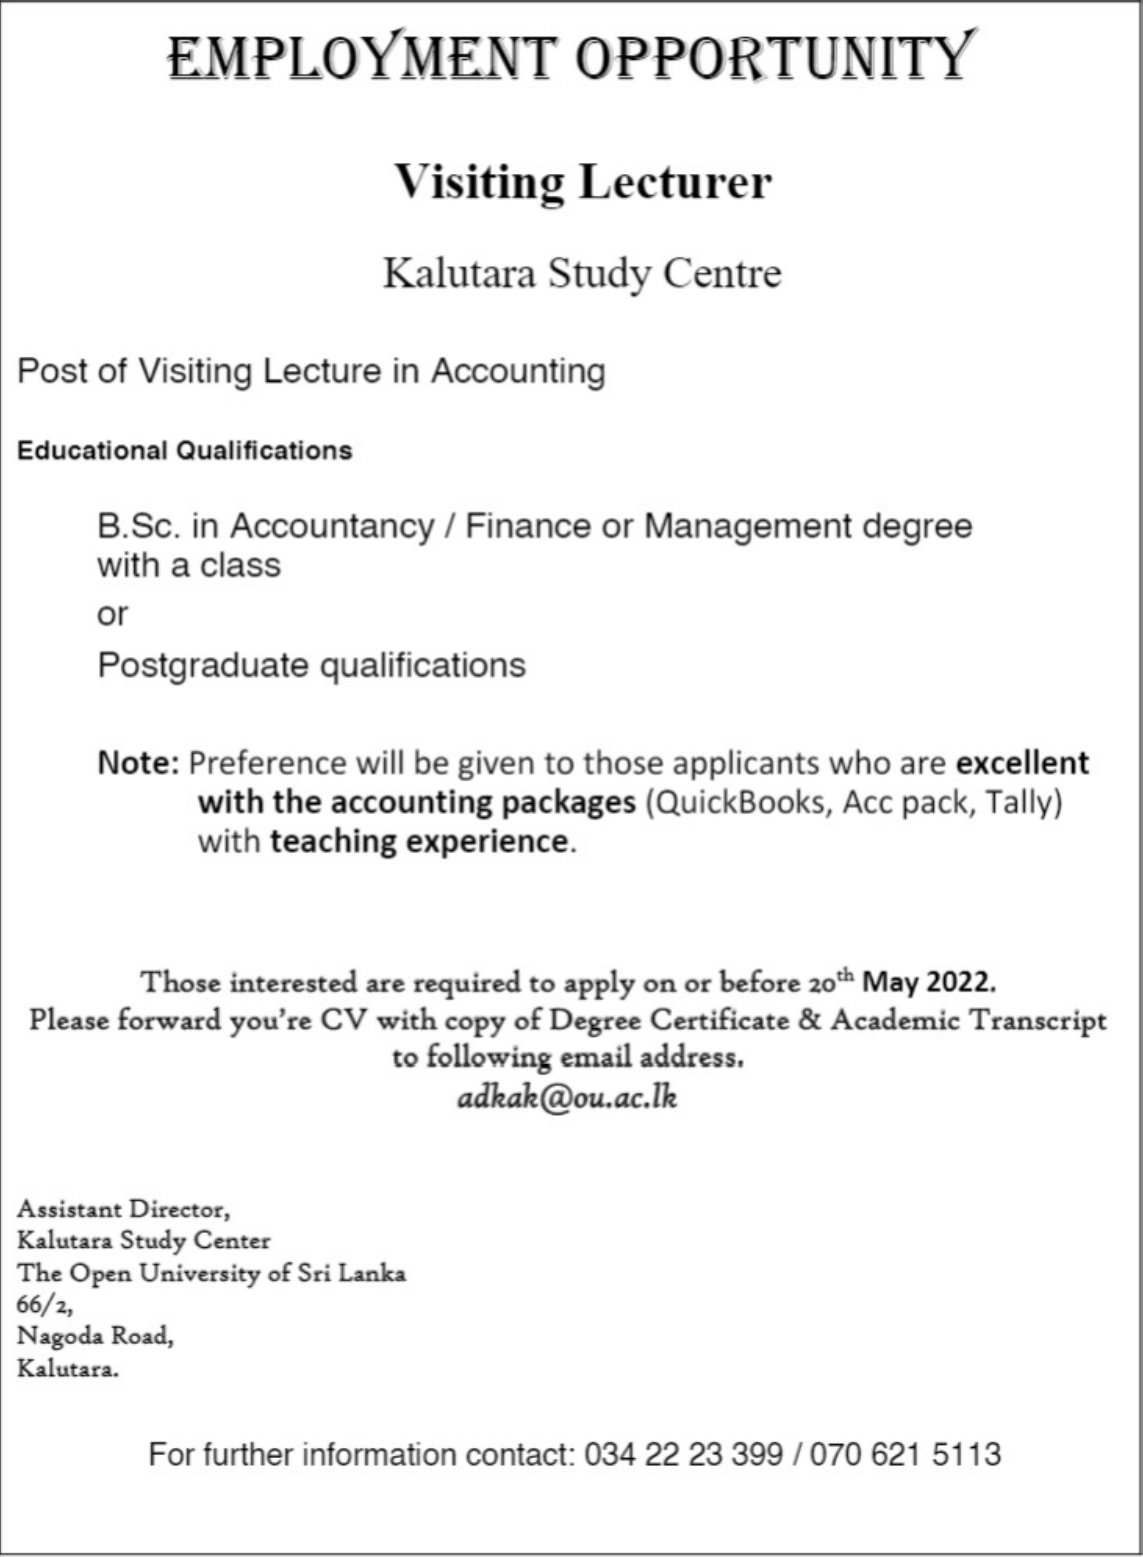 Visiting Lecturer Vacancies 2022 - Open University of Sri Lanka Jobs Vacancies Details